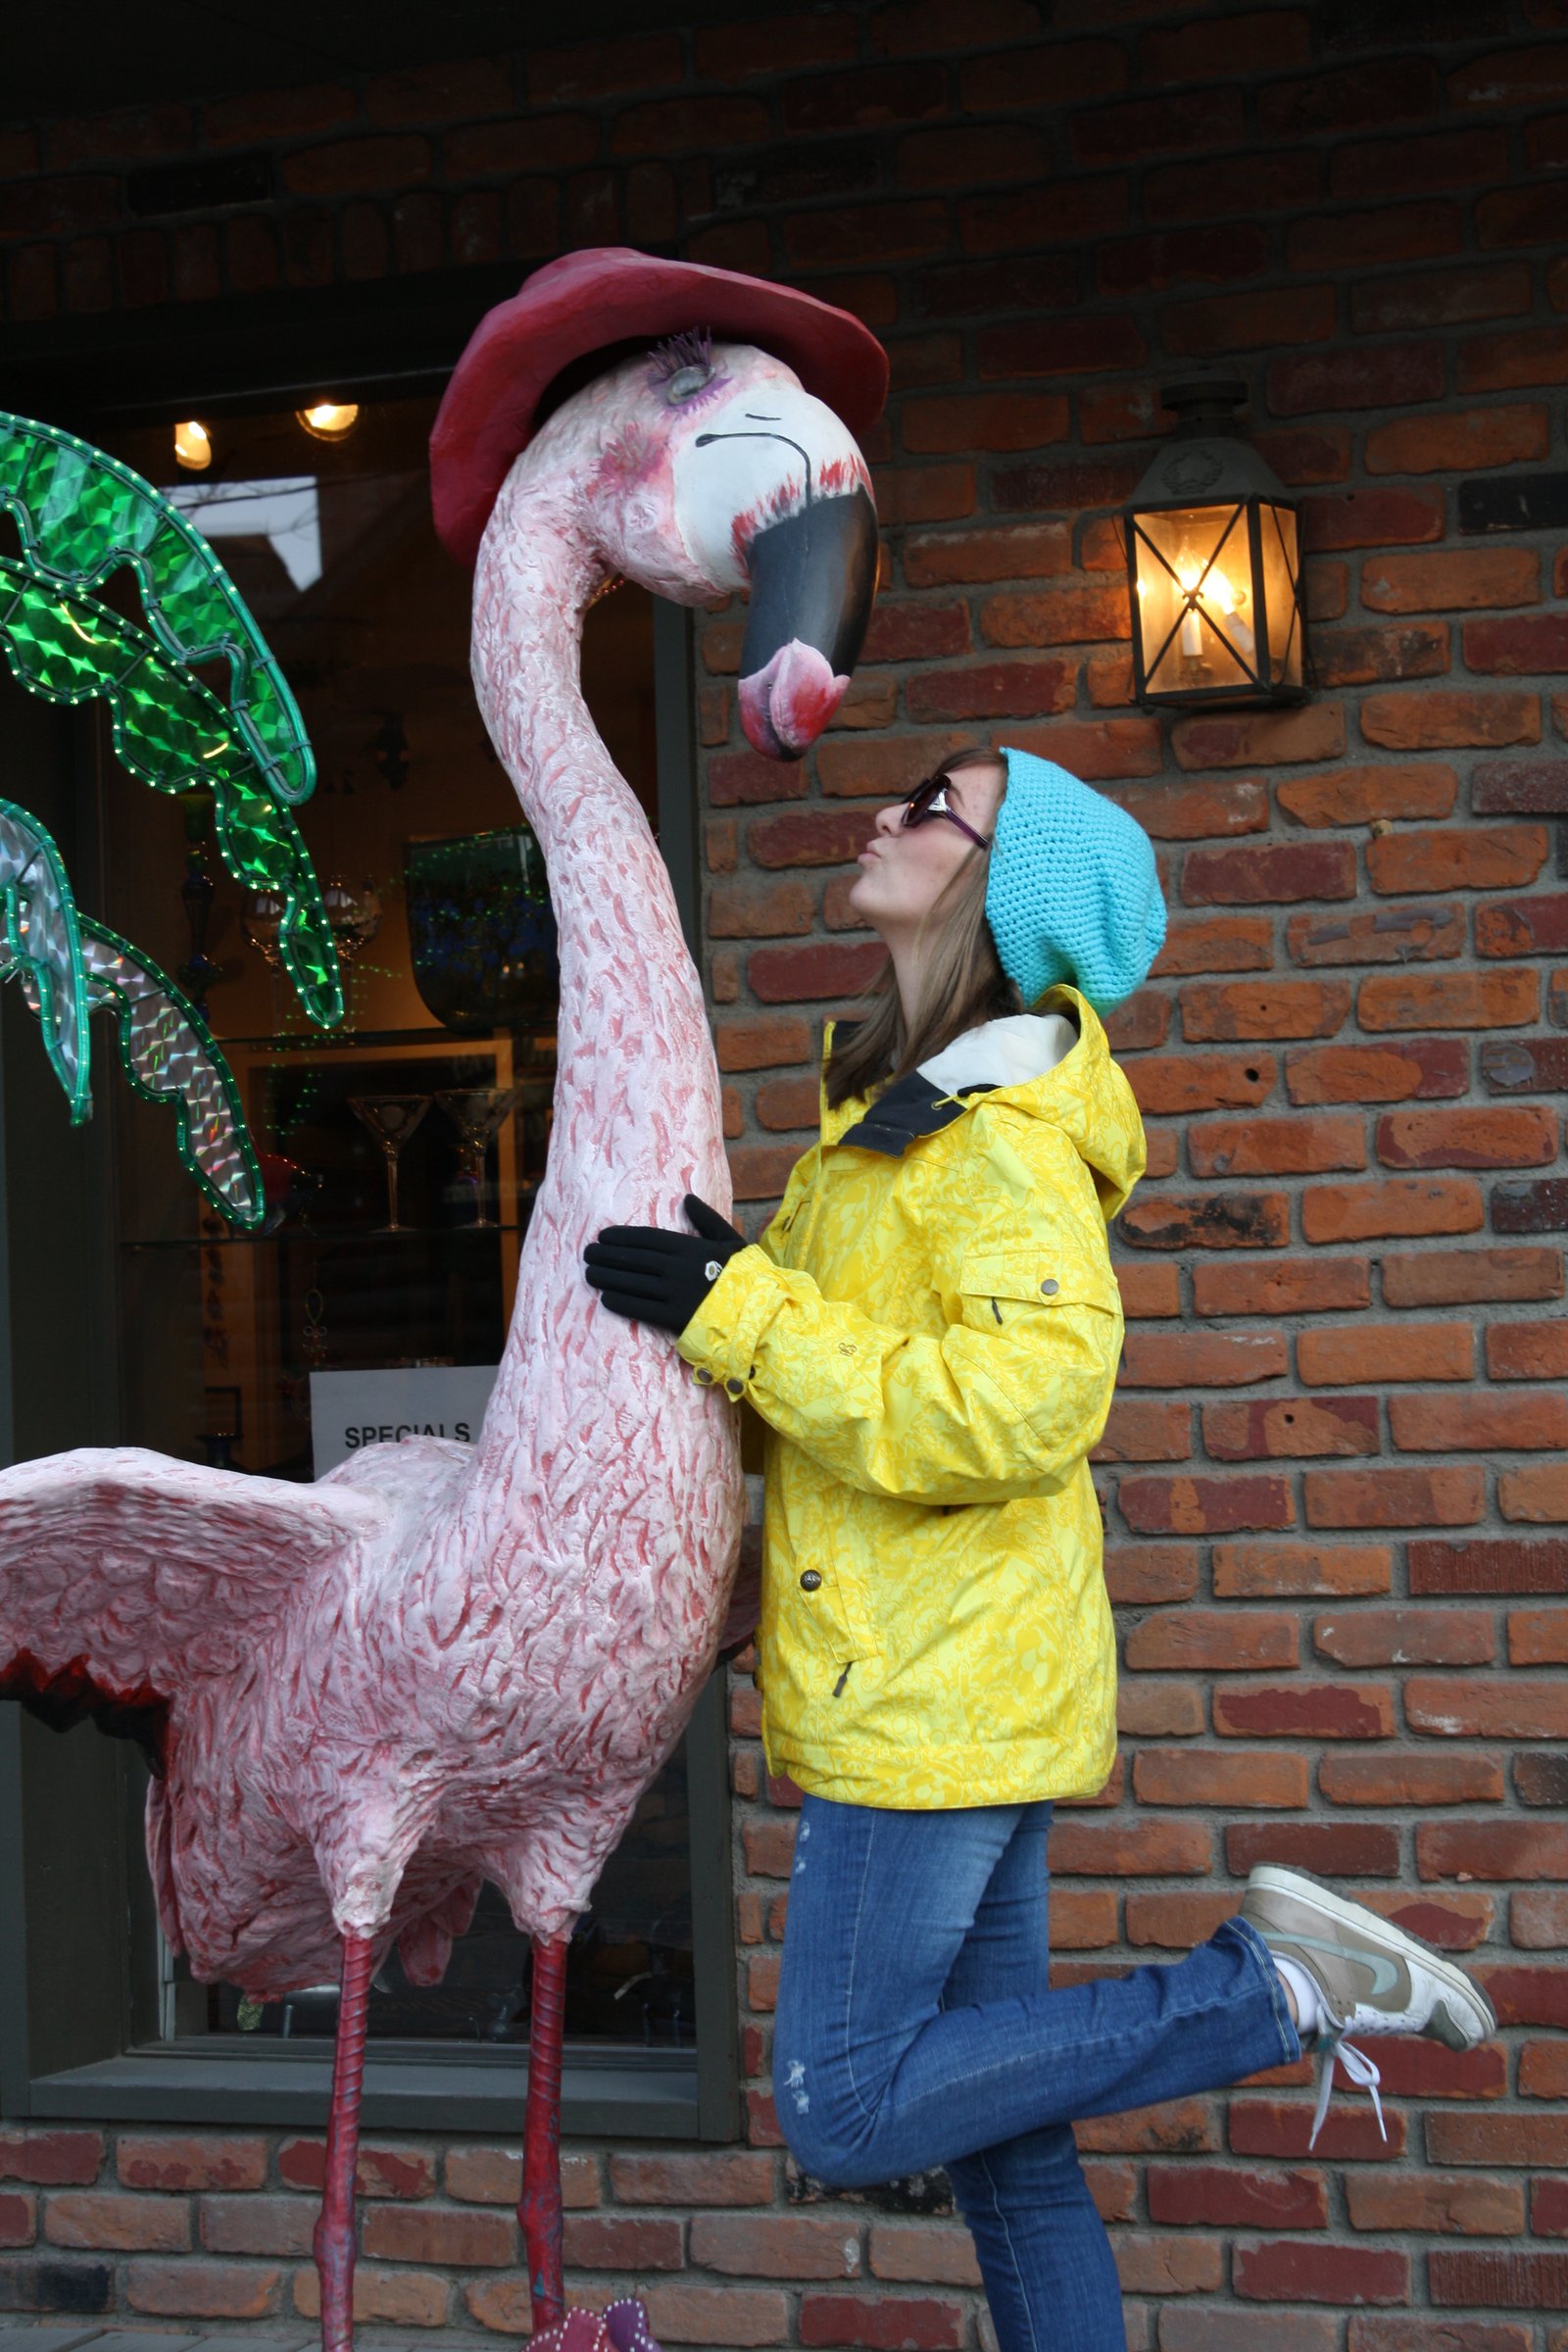 Kissin flamingos is a hobby of mine